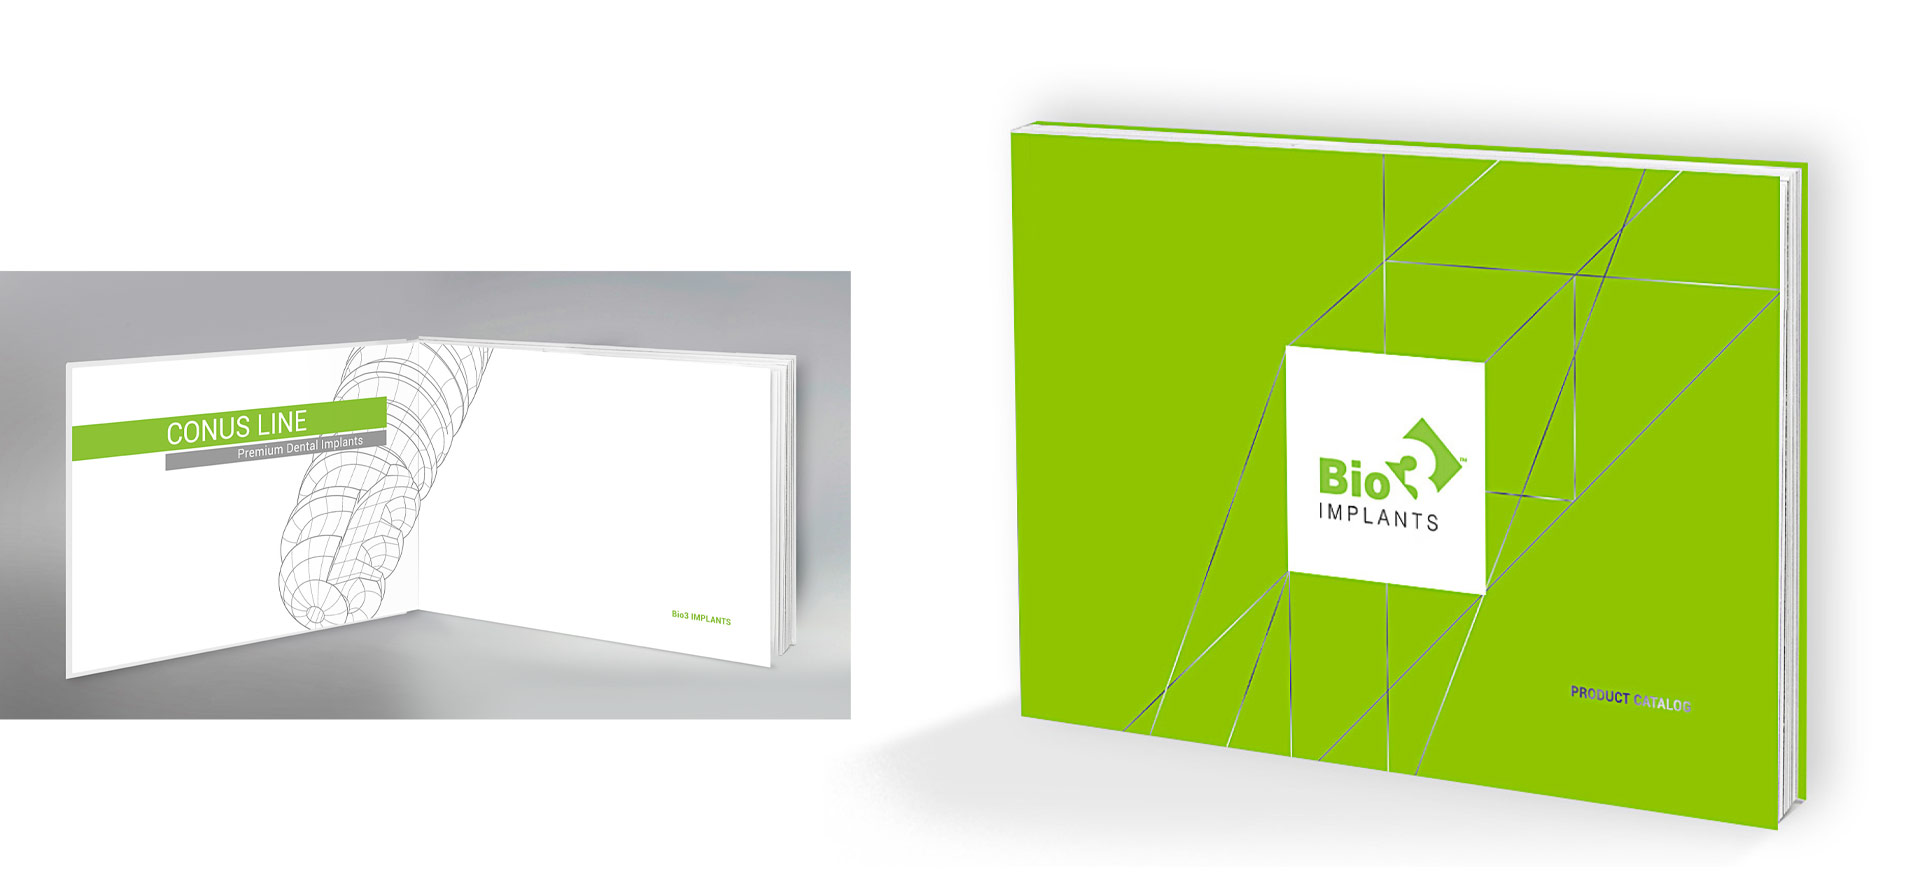 Bio3 Implants Catalogue 1